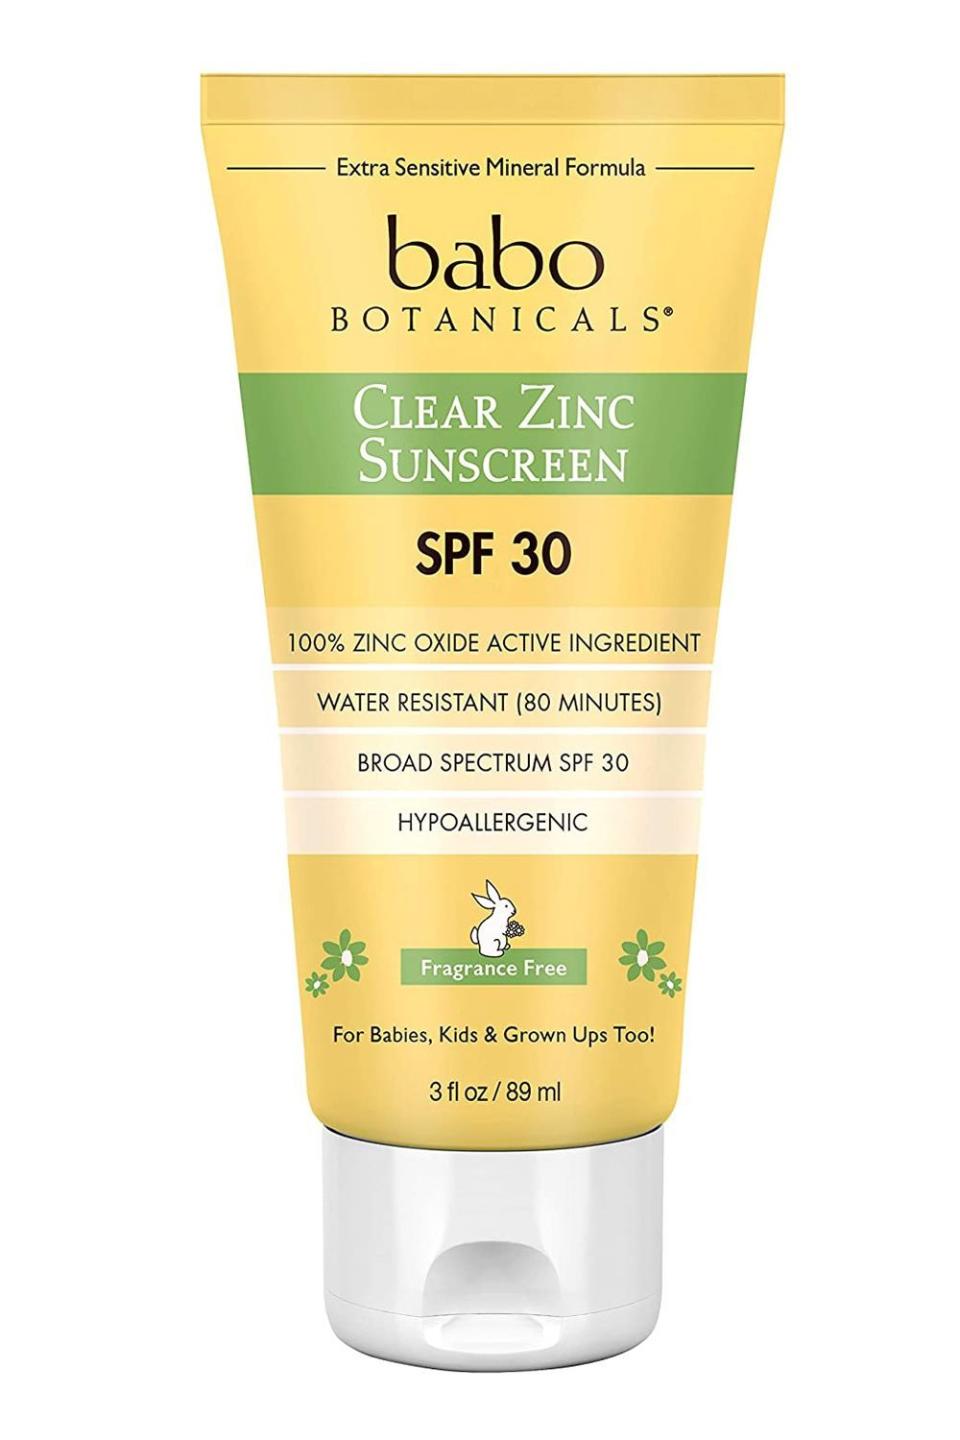 8) Babo Botanicals Zinc Sunscreen Lotion SPF 30